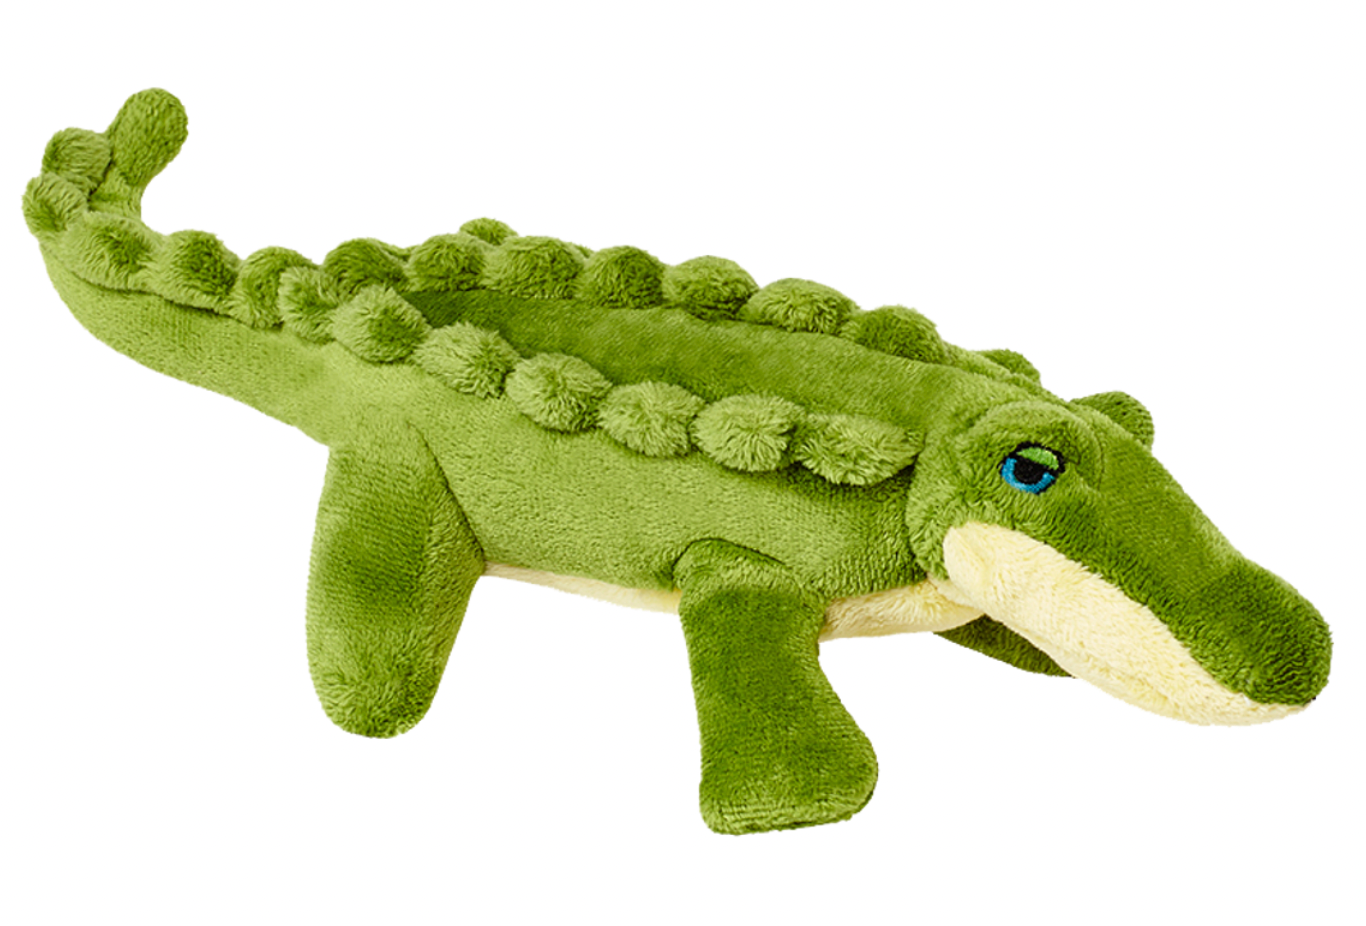 Fluff & Tuff "Savannah Baby Gator" Squeaky Plush Dog Toy